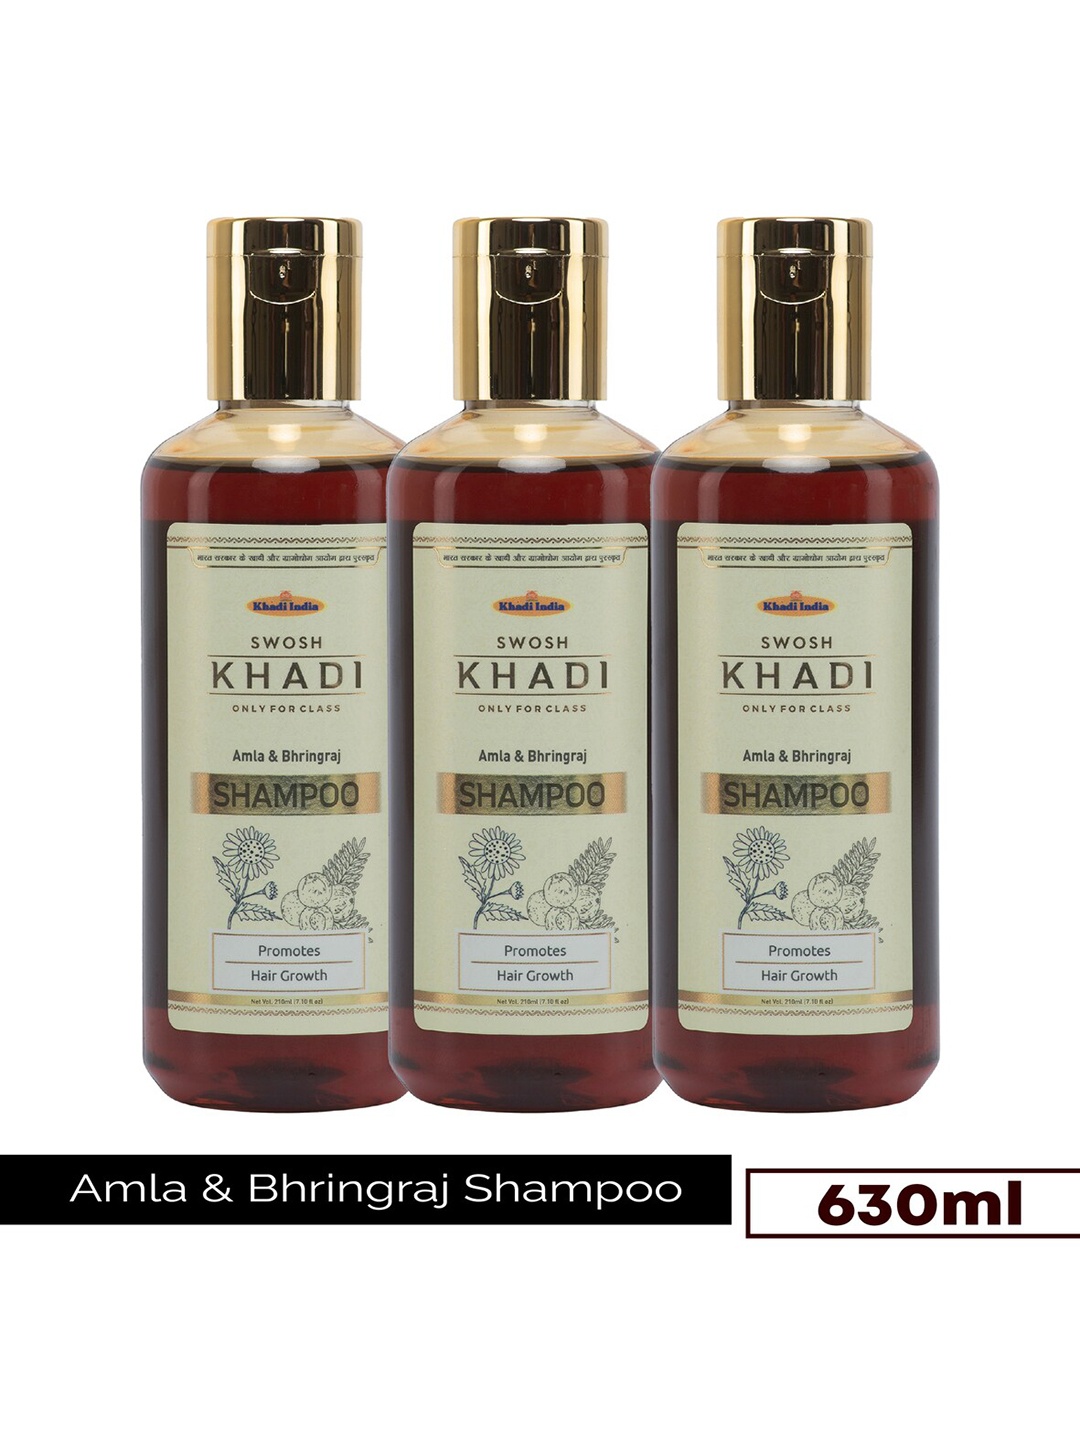 

SWOSH Set of 3 Khadi Amla & Bhringraj Shampoo for Hair Growth - 210 ml Each, Brown